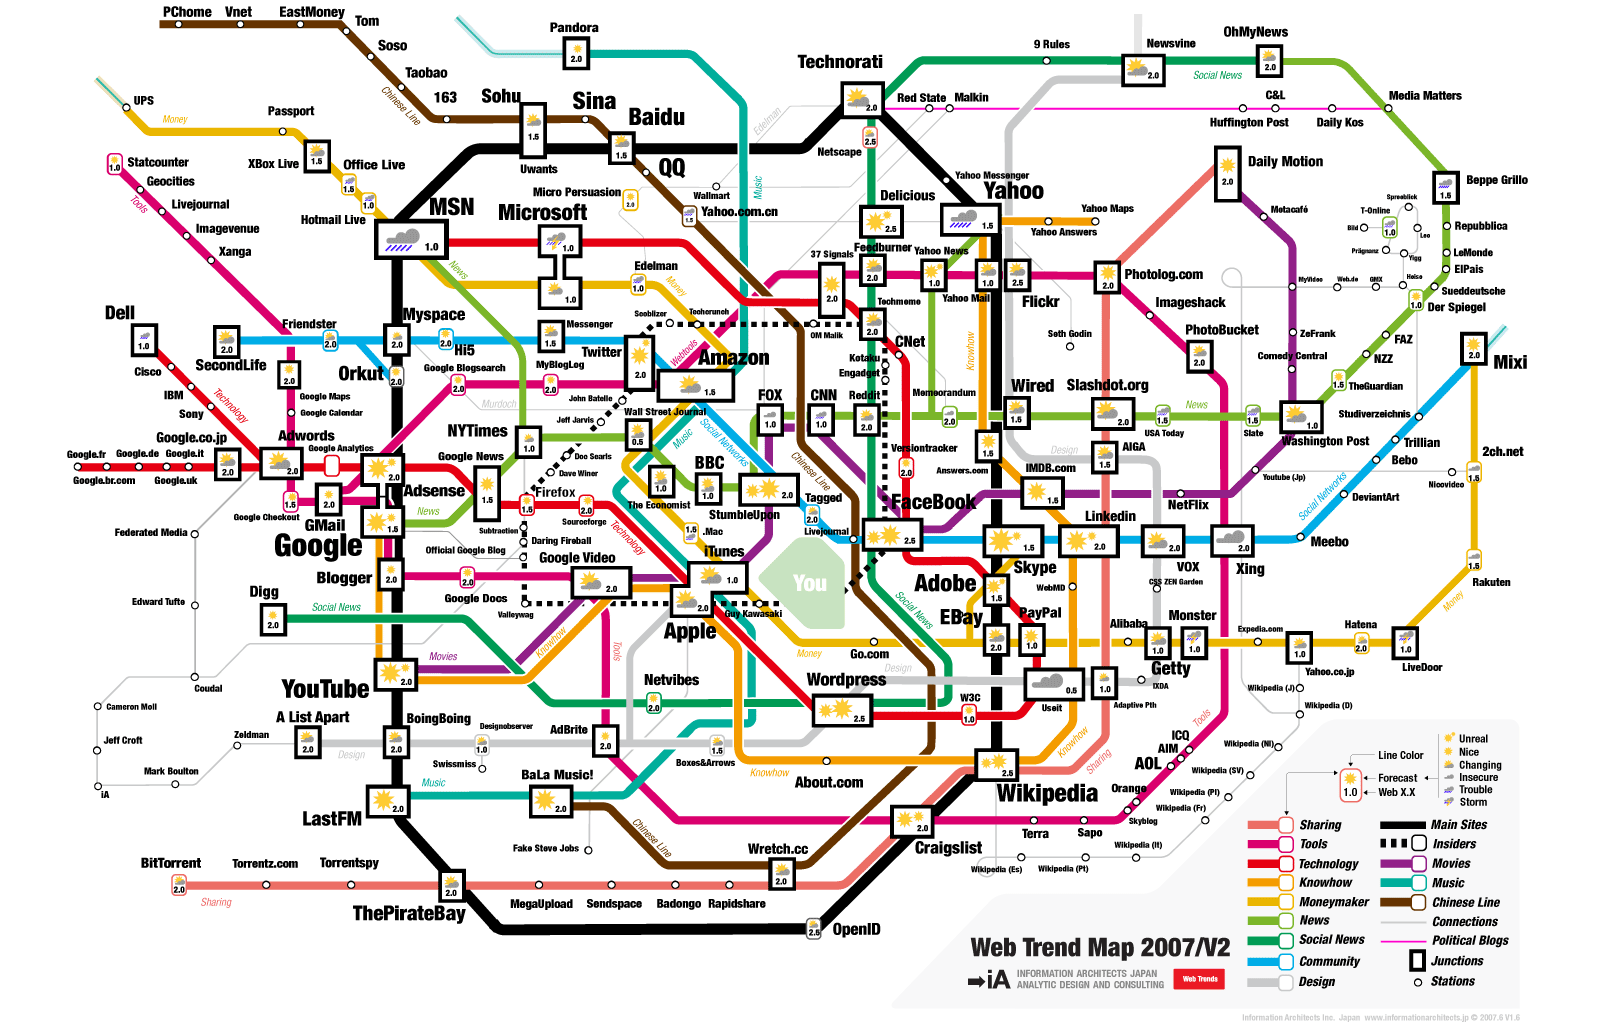 Map New York City Subway Pdf